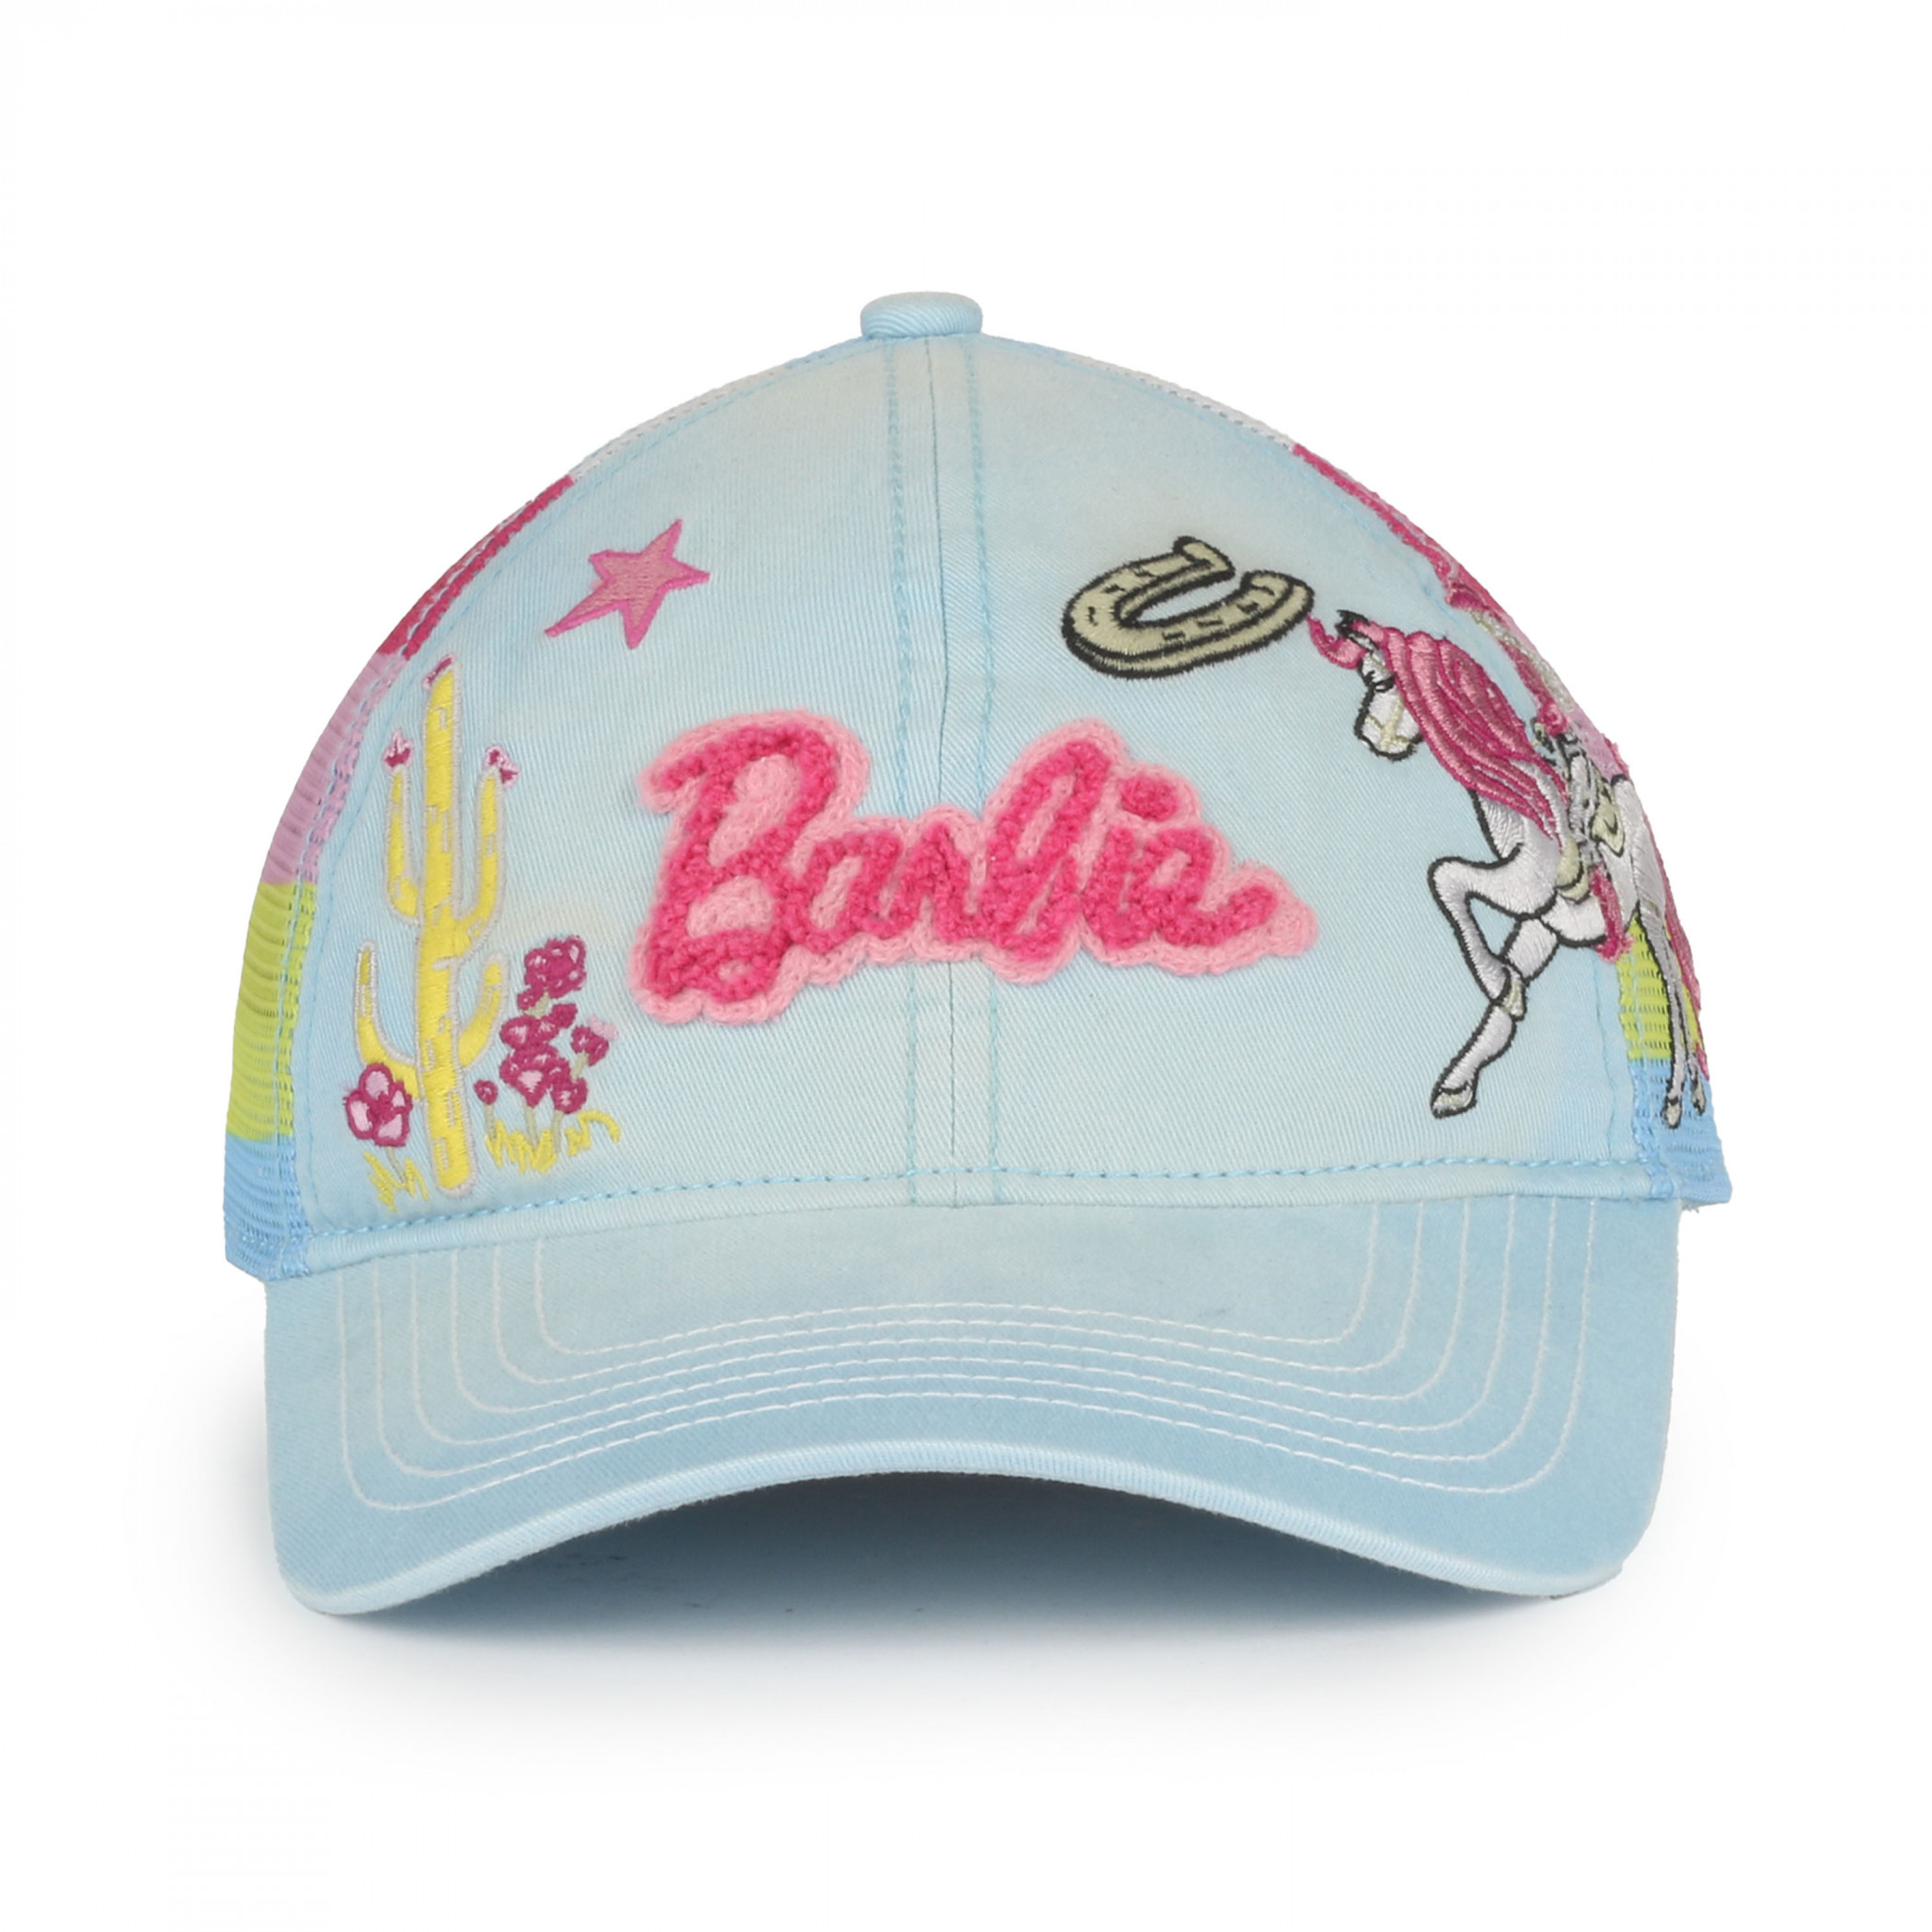 Barbie Horse Adventures Adjustable Hat